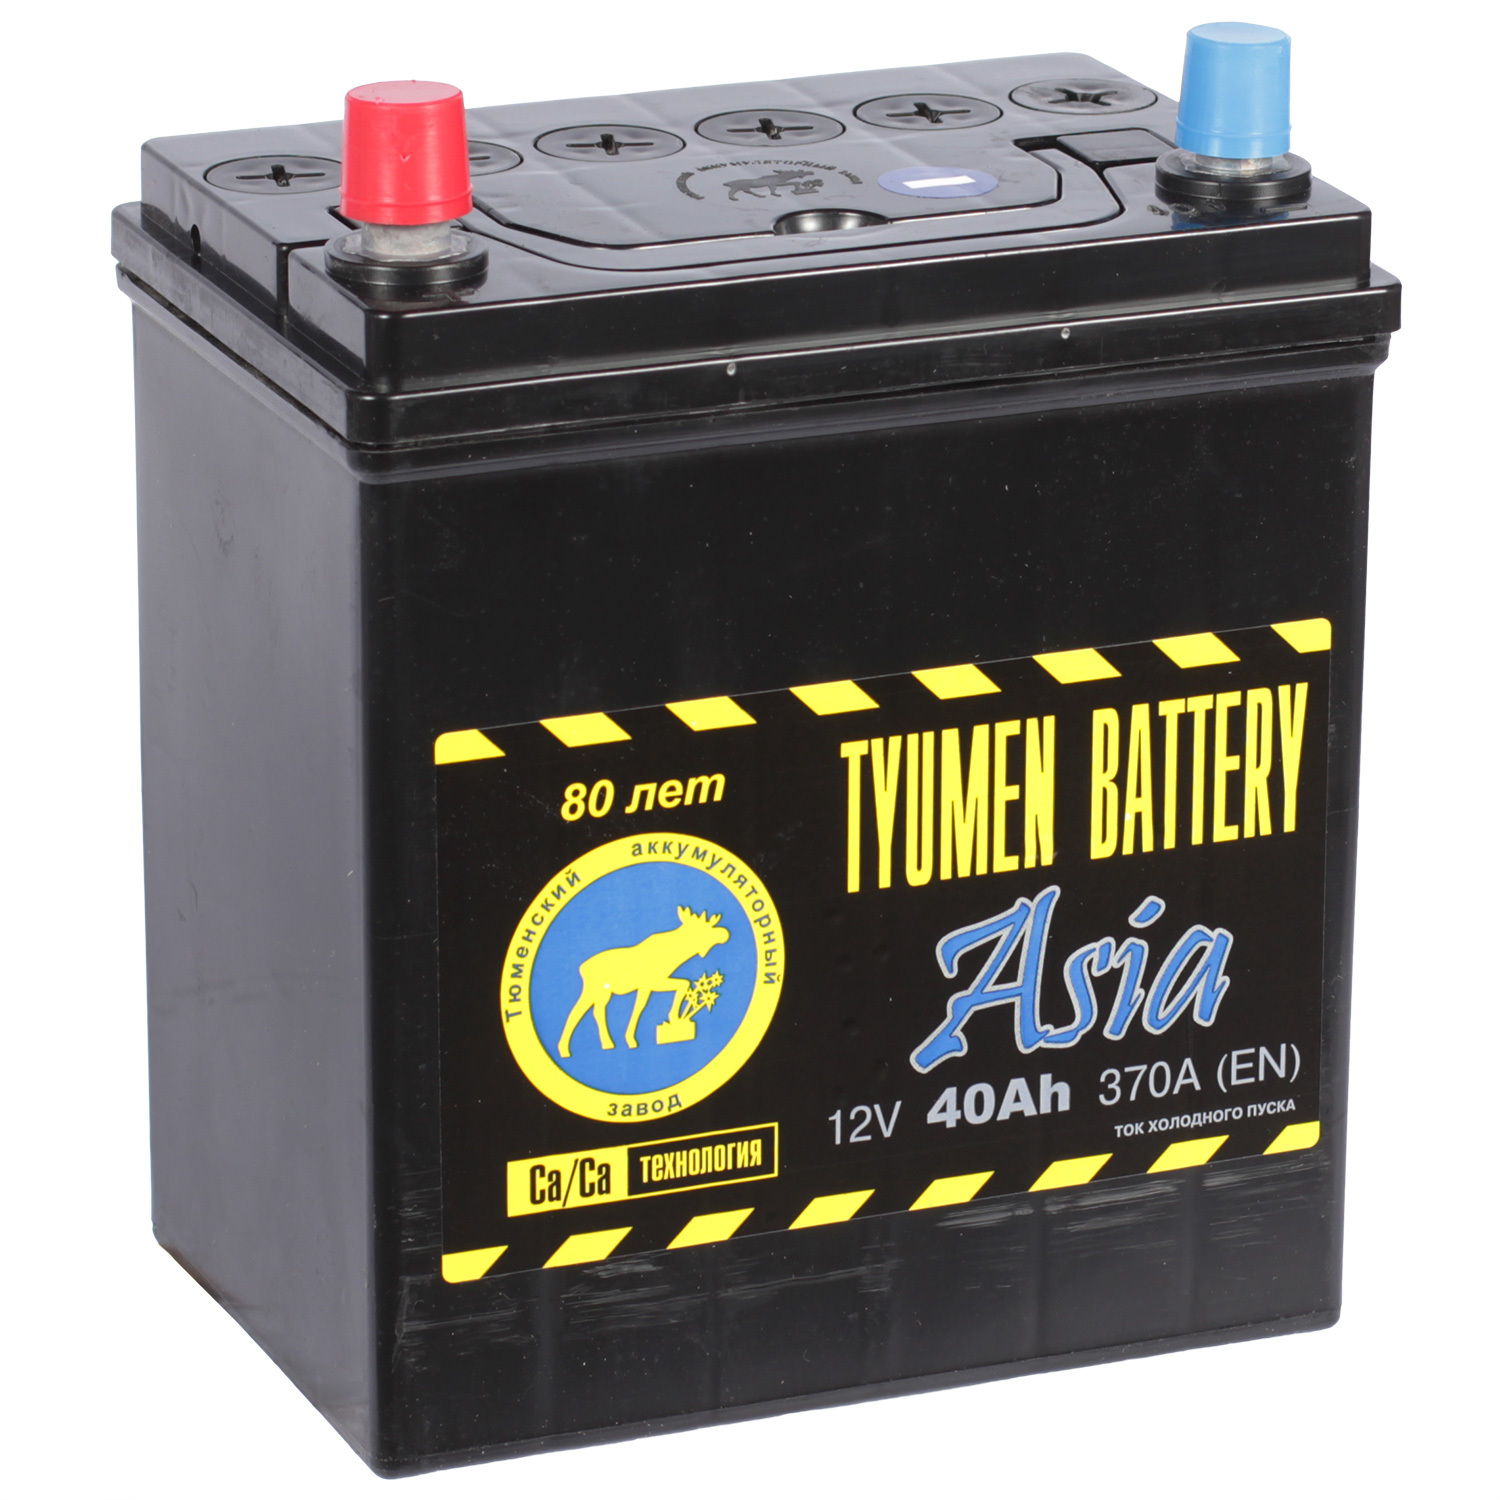 Tyumen Battery Автомобильный аккумулятор Tyumen Battery Asia 40 Ач прямая полярность B19R tyumen battery автомобильный аккумулятор tyumen battery standard 55 ач прямая полярность l2